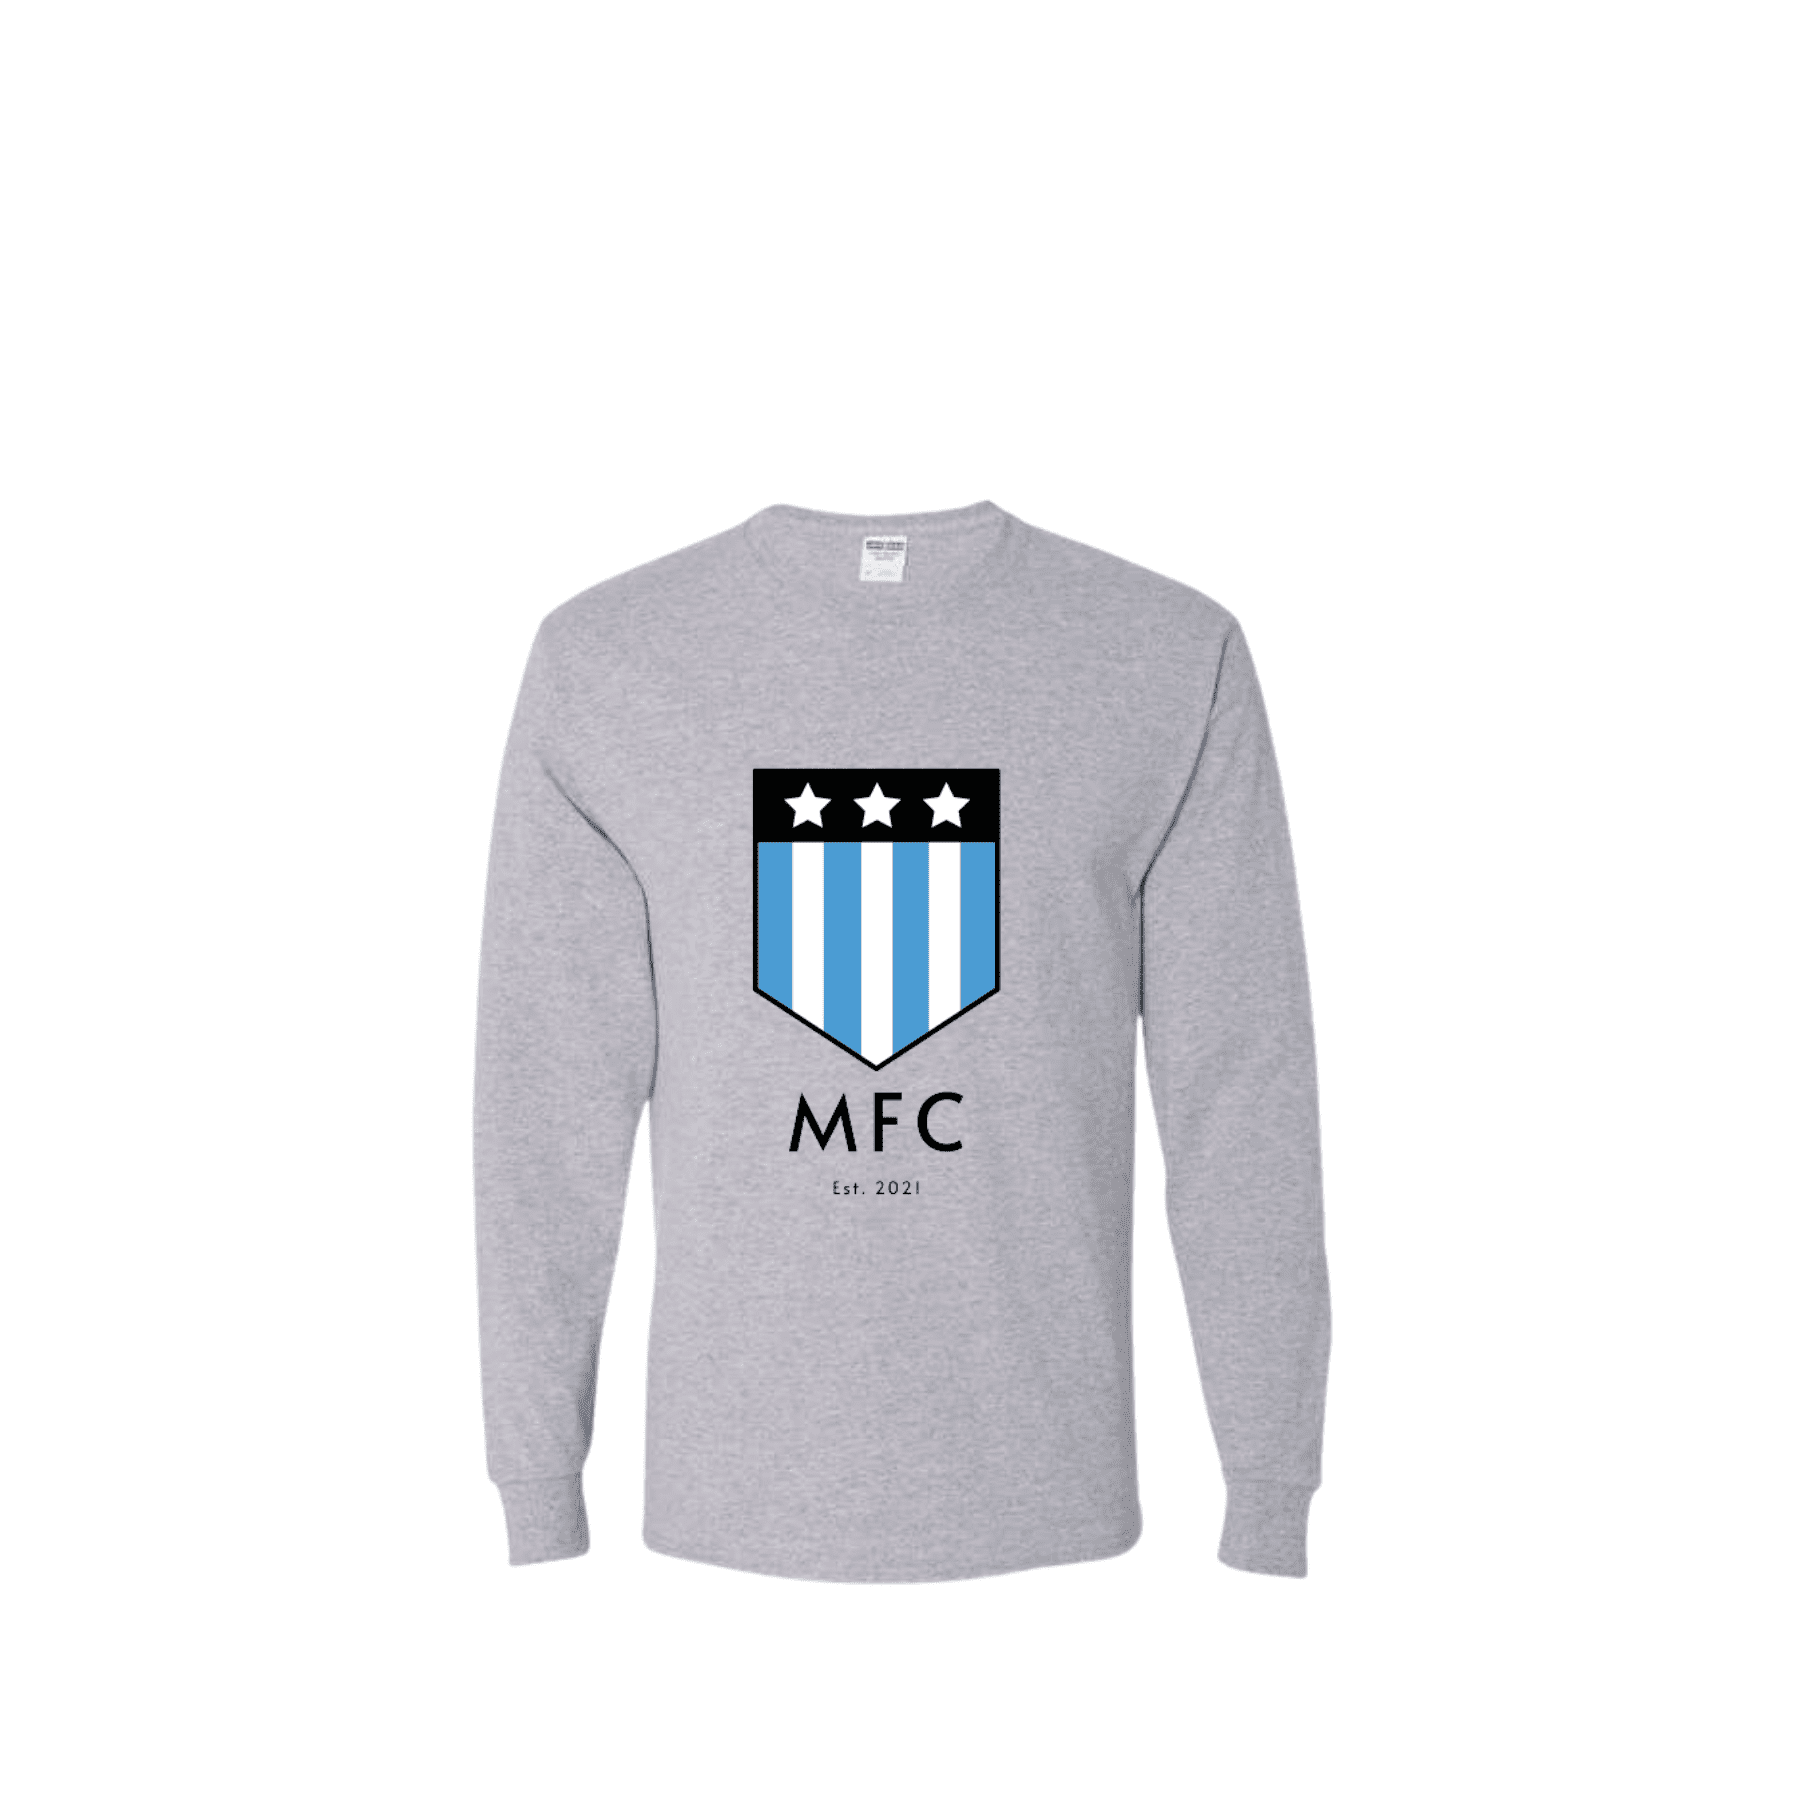 Image shows a MFC long sleeve dri power grey t shirt